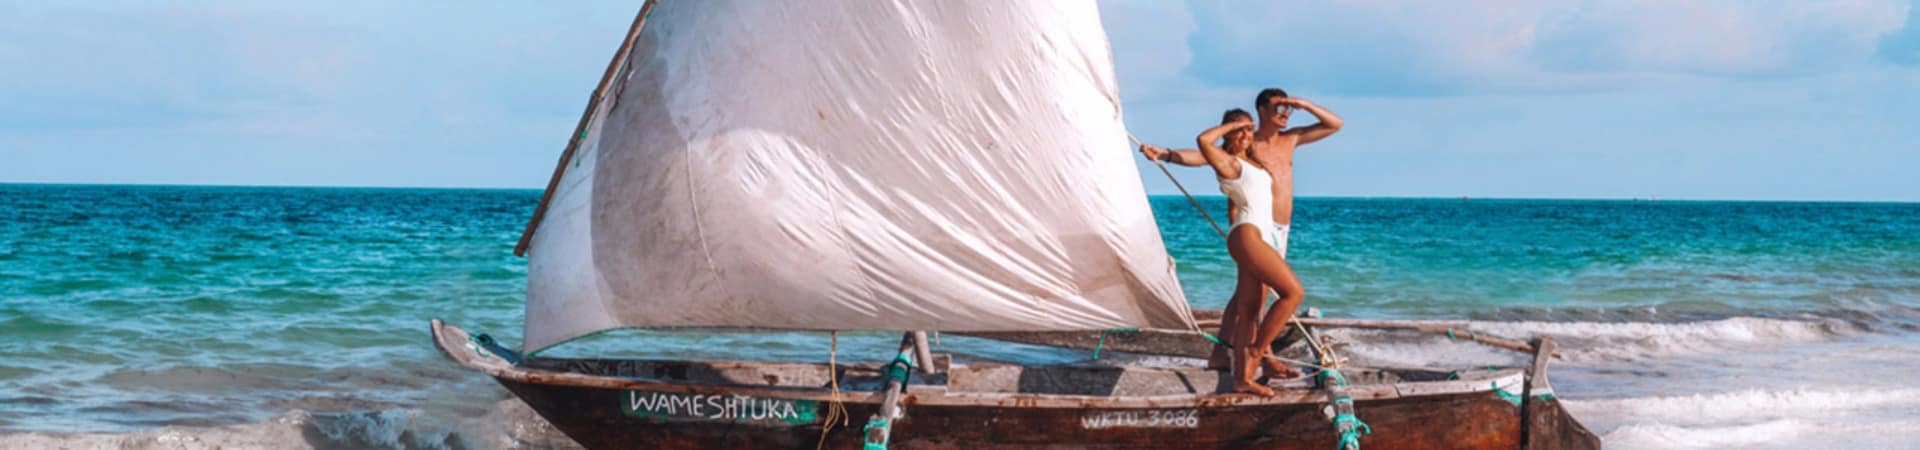 Zanzibar white sand luxury villas barco